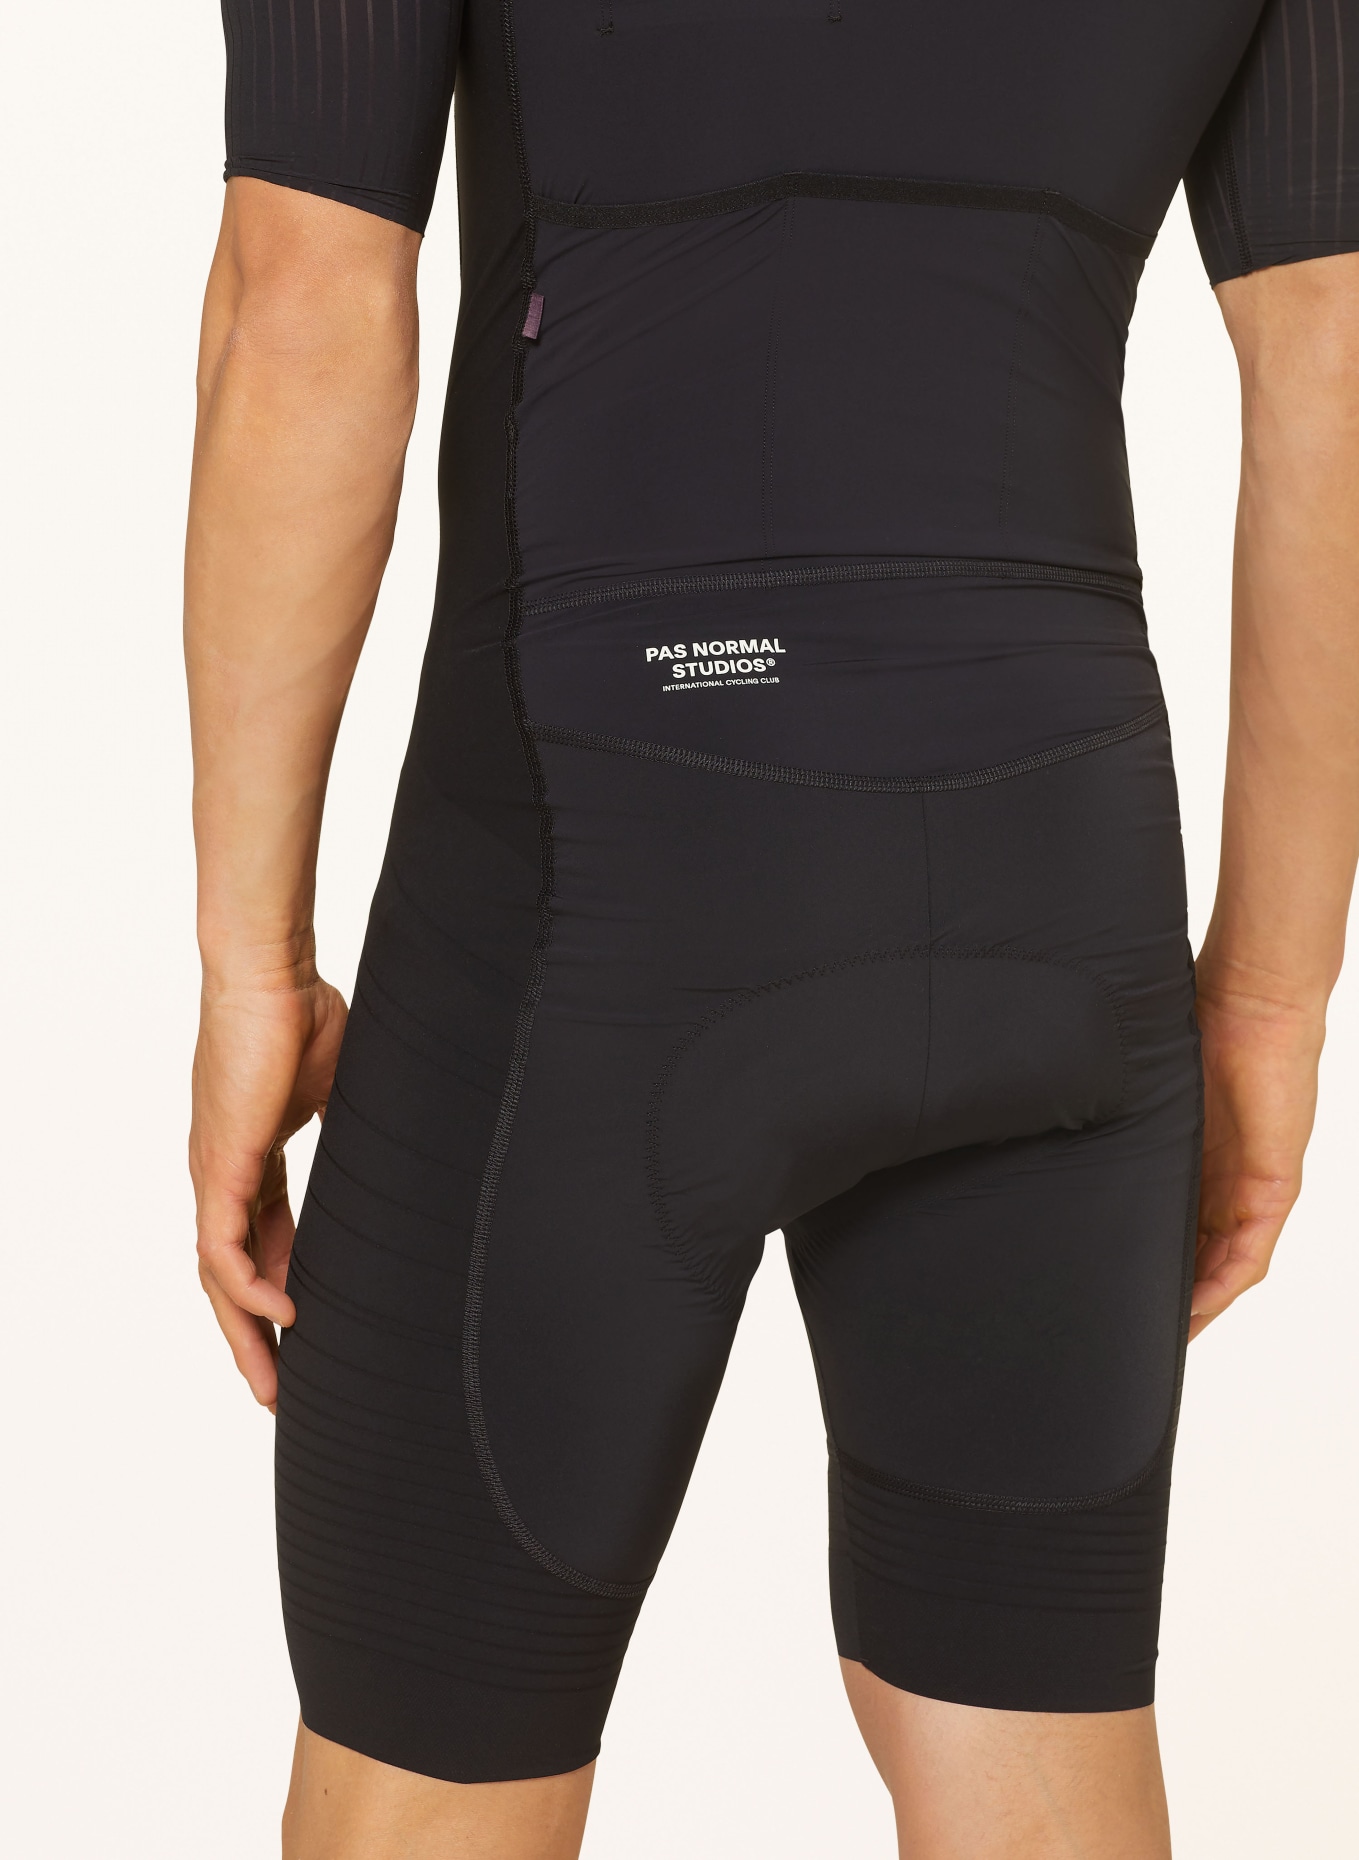 PAS NORMAL STUDIOS Speedsuit MECHANISM PRO with padded insert, Color: BLACK (Image 5)